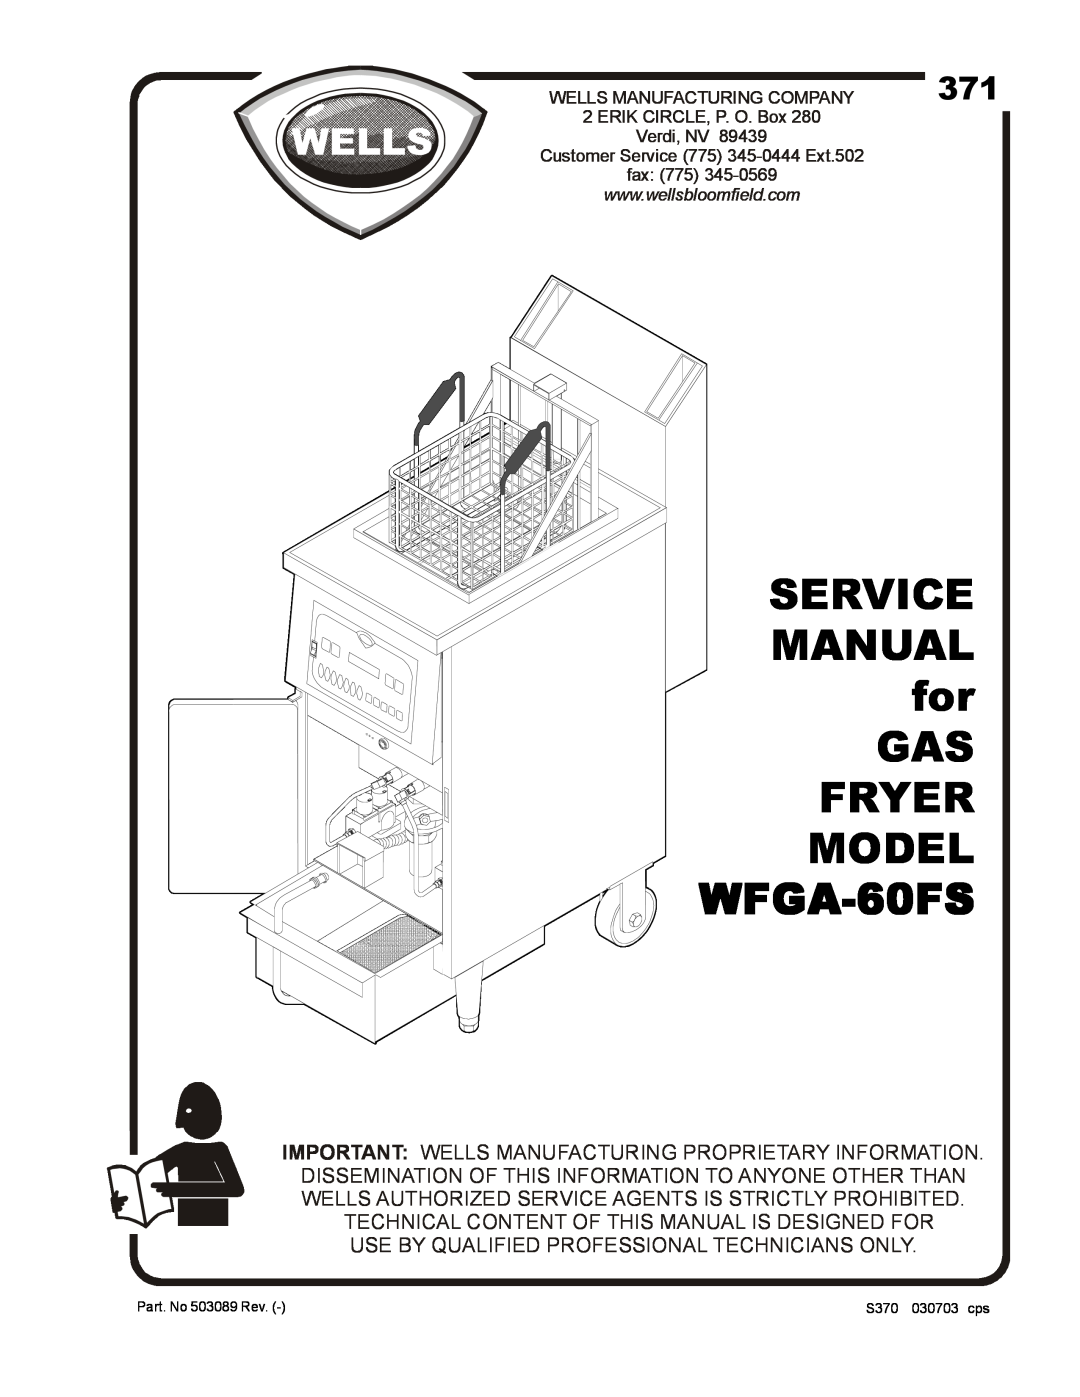 Wells service manual SERVICE MANUAL for GAS FRYER MODEL WFGA-60FS 